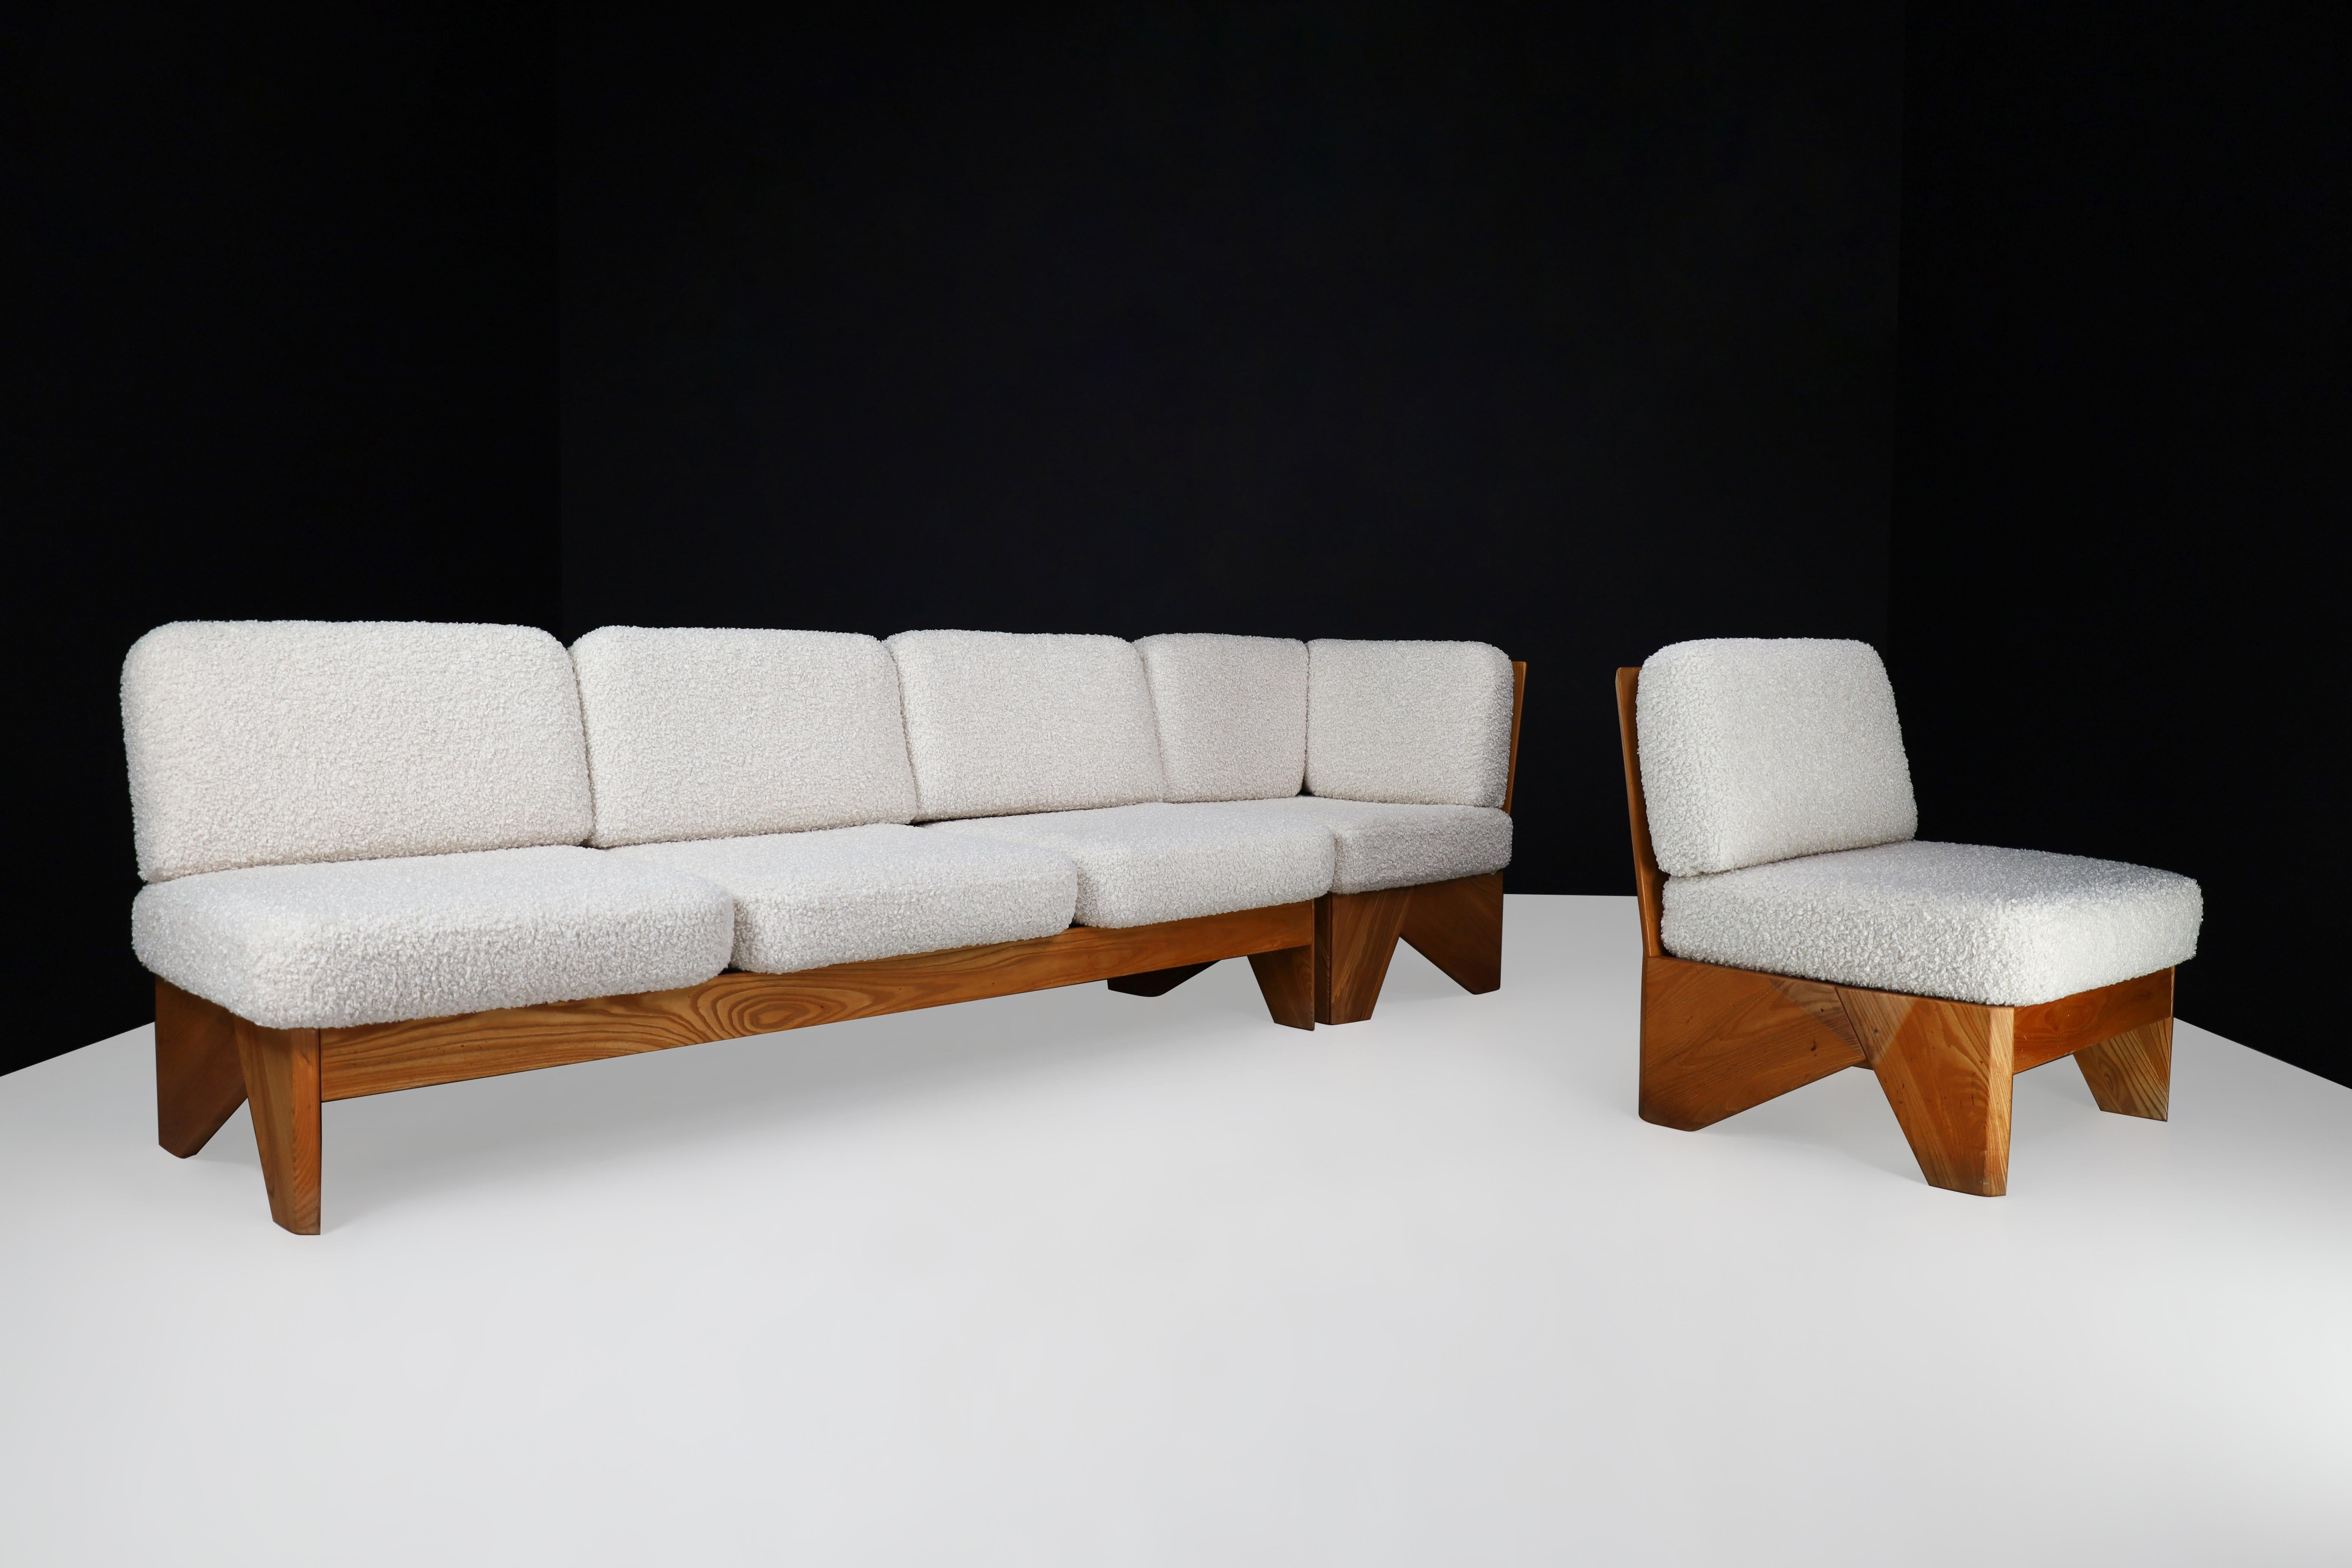 Maison Regain Style Sofa/Living Room Set in Elm and Bouclé Fabric, France 1970s  For Sale 1